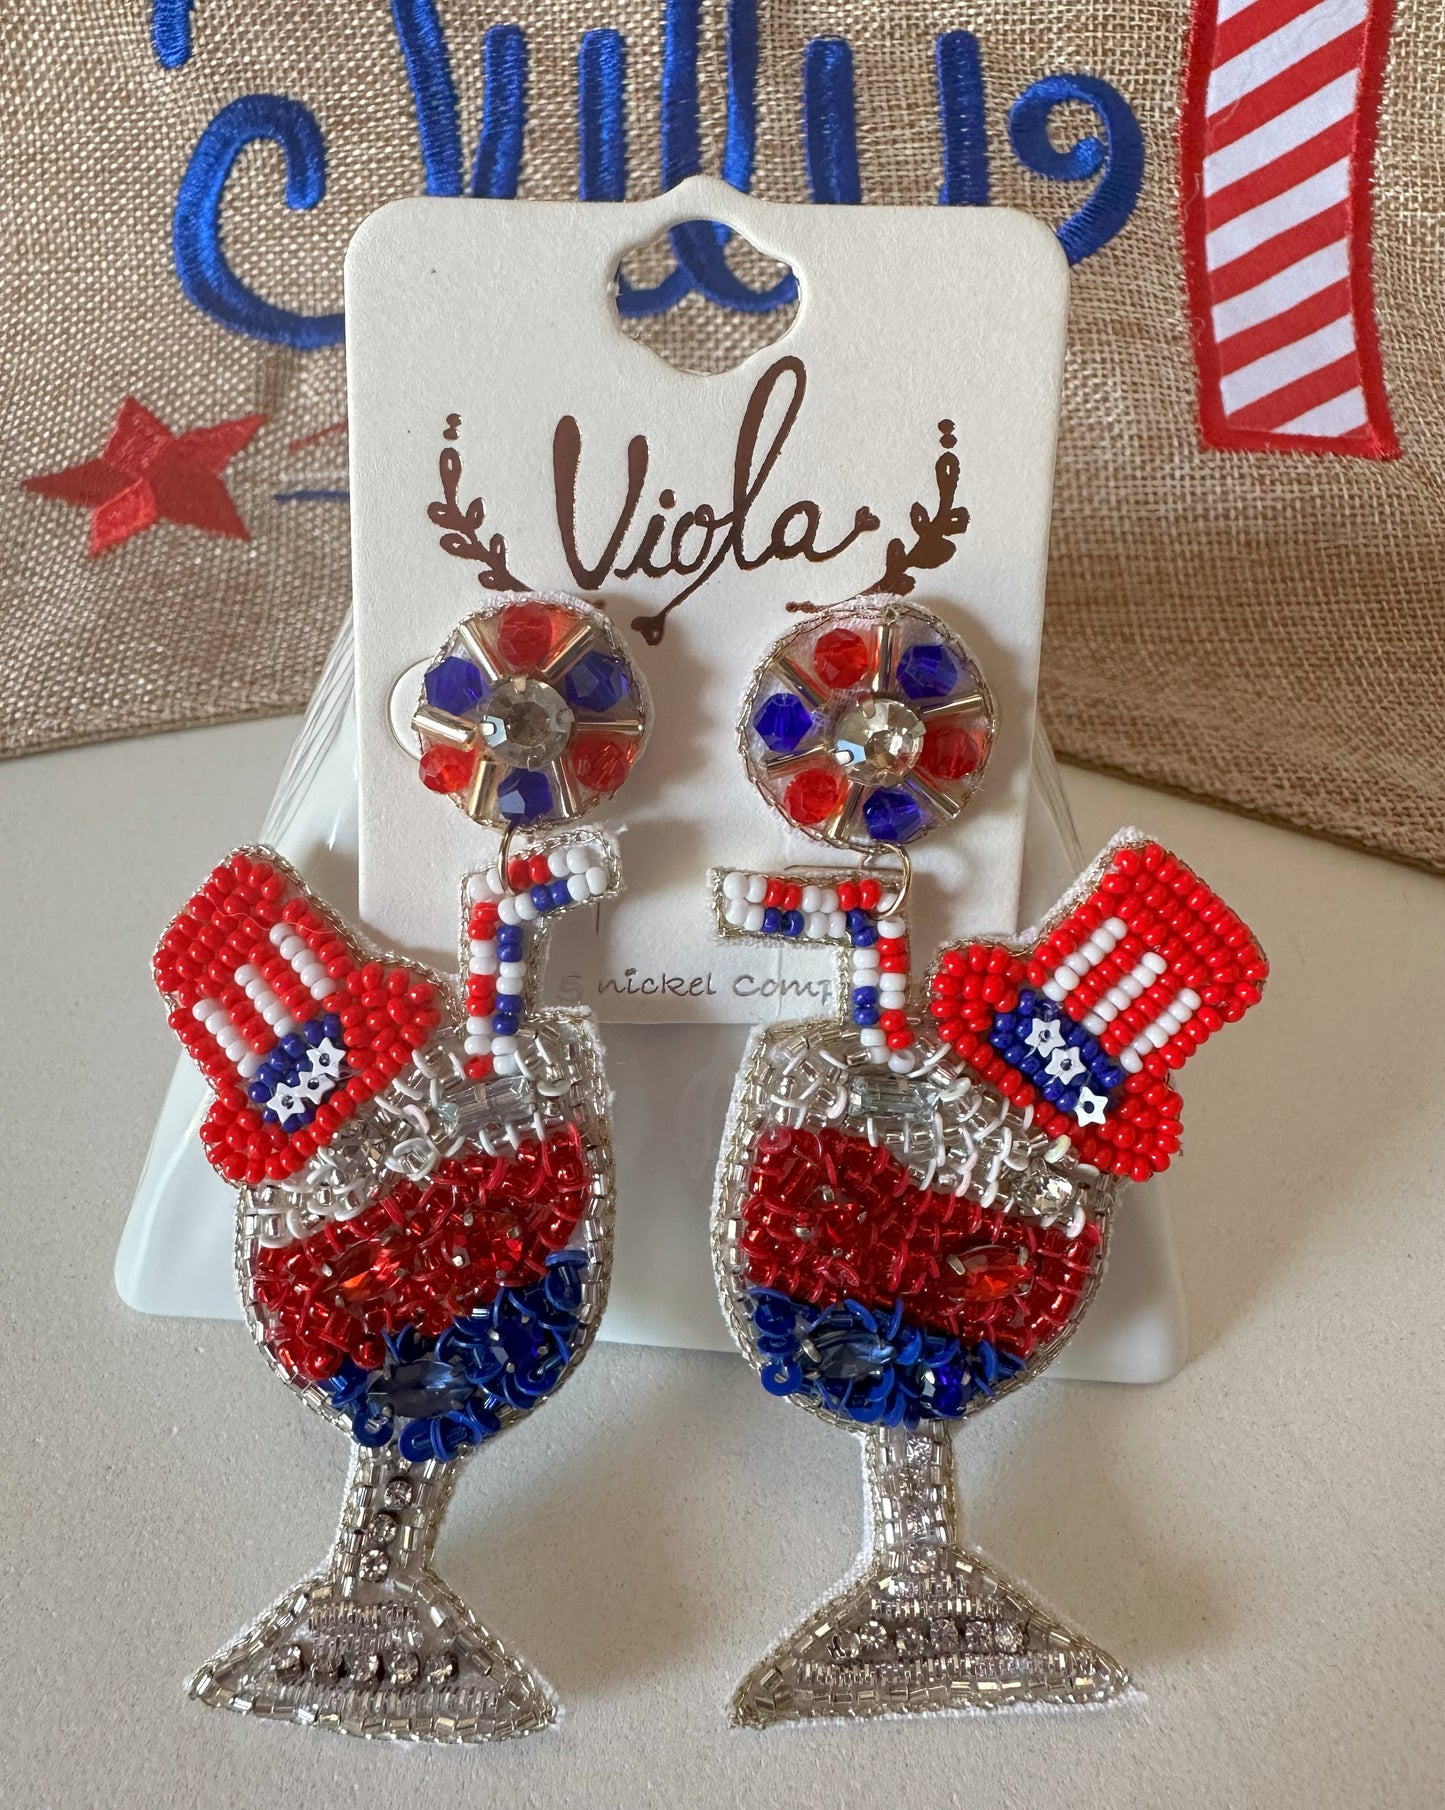 Red, White and Blue Patriotic Celebration Champaign Glasses under Fireworks Earrings Earrings Dallas Market Center   